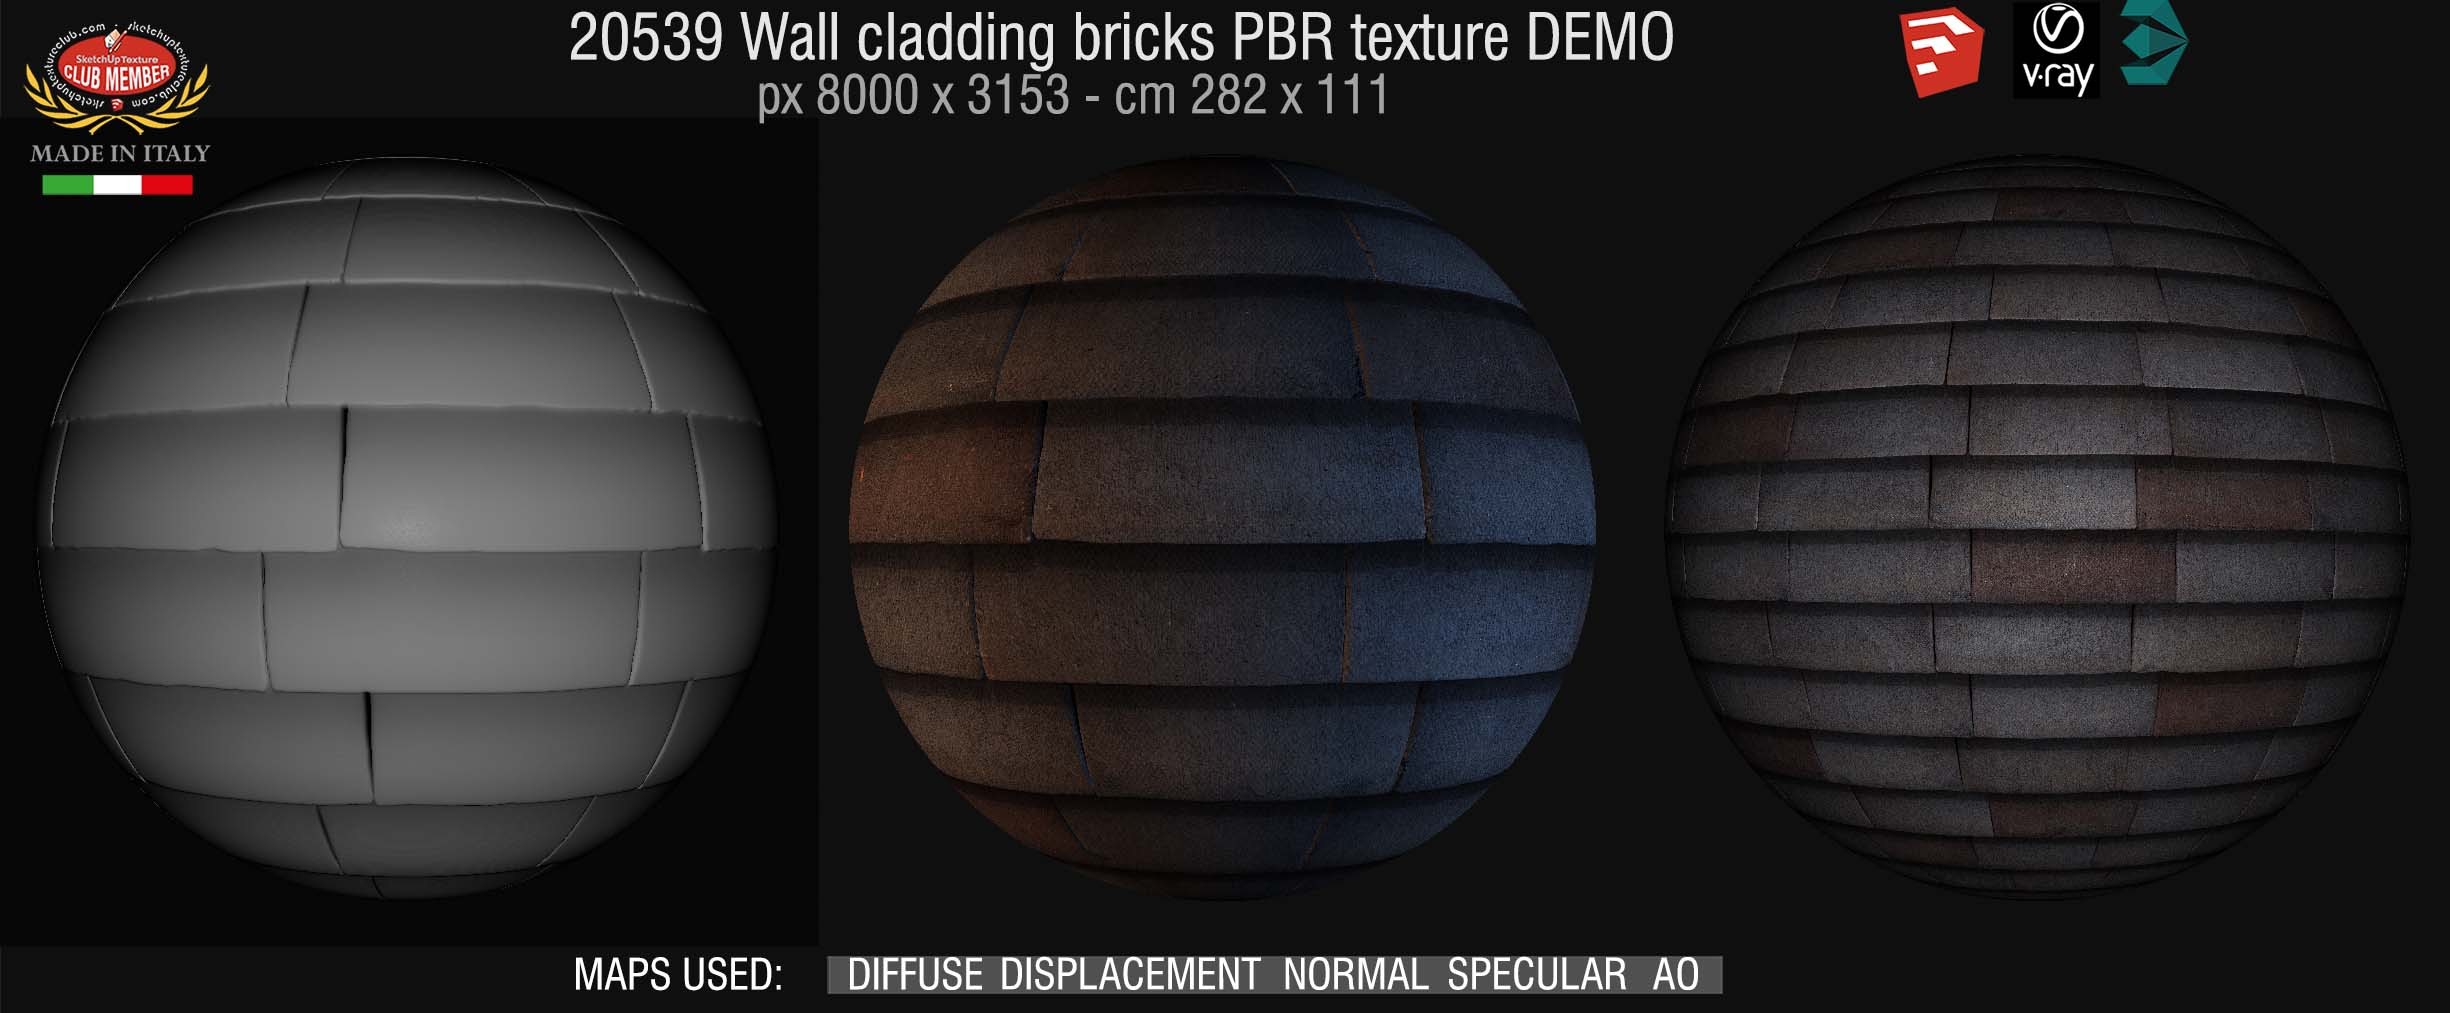 21539 Wall cladding bricks PBR texture seamless DEMO